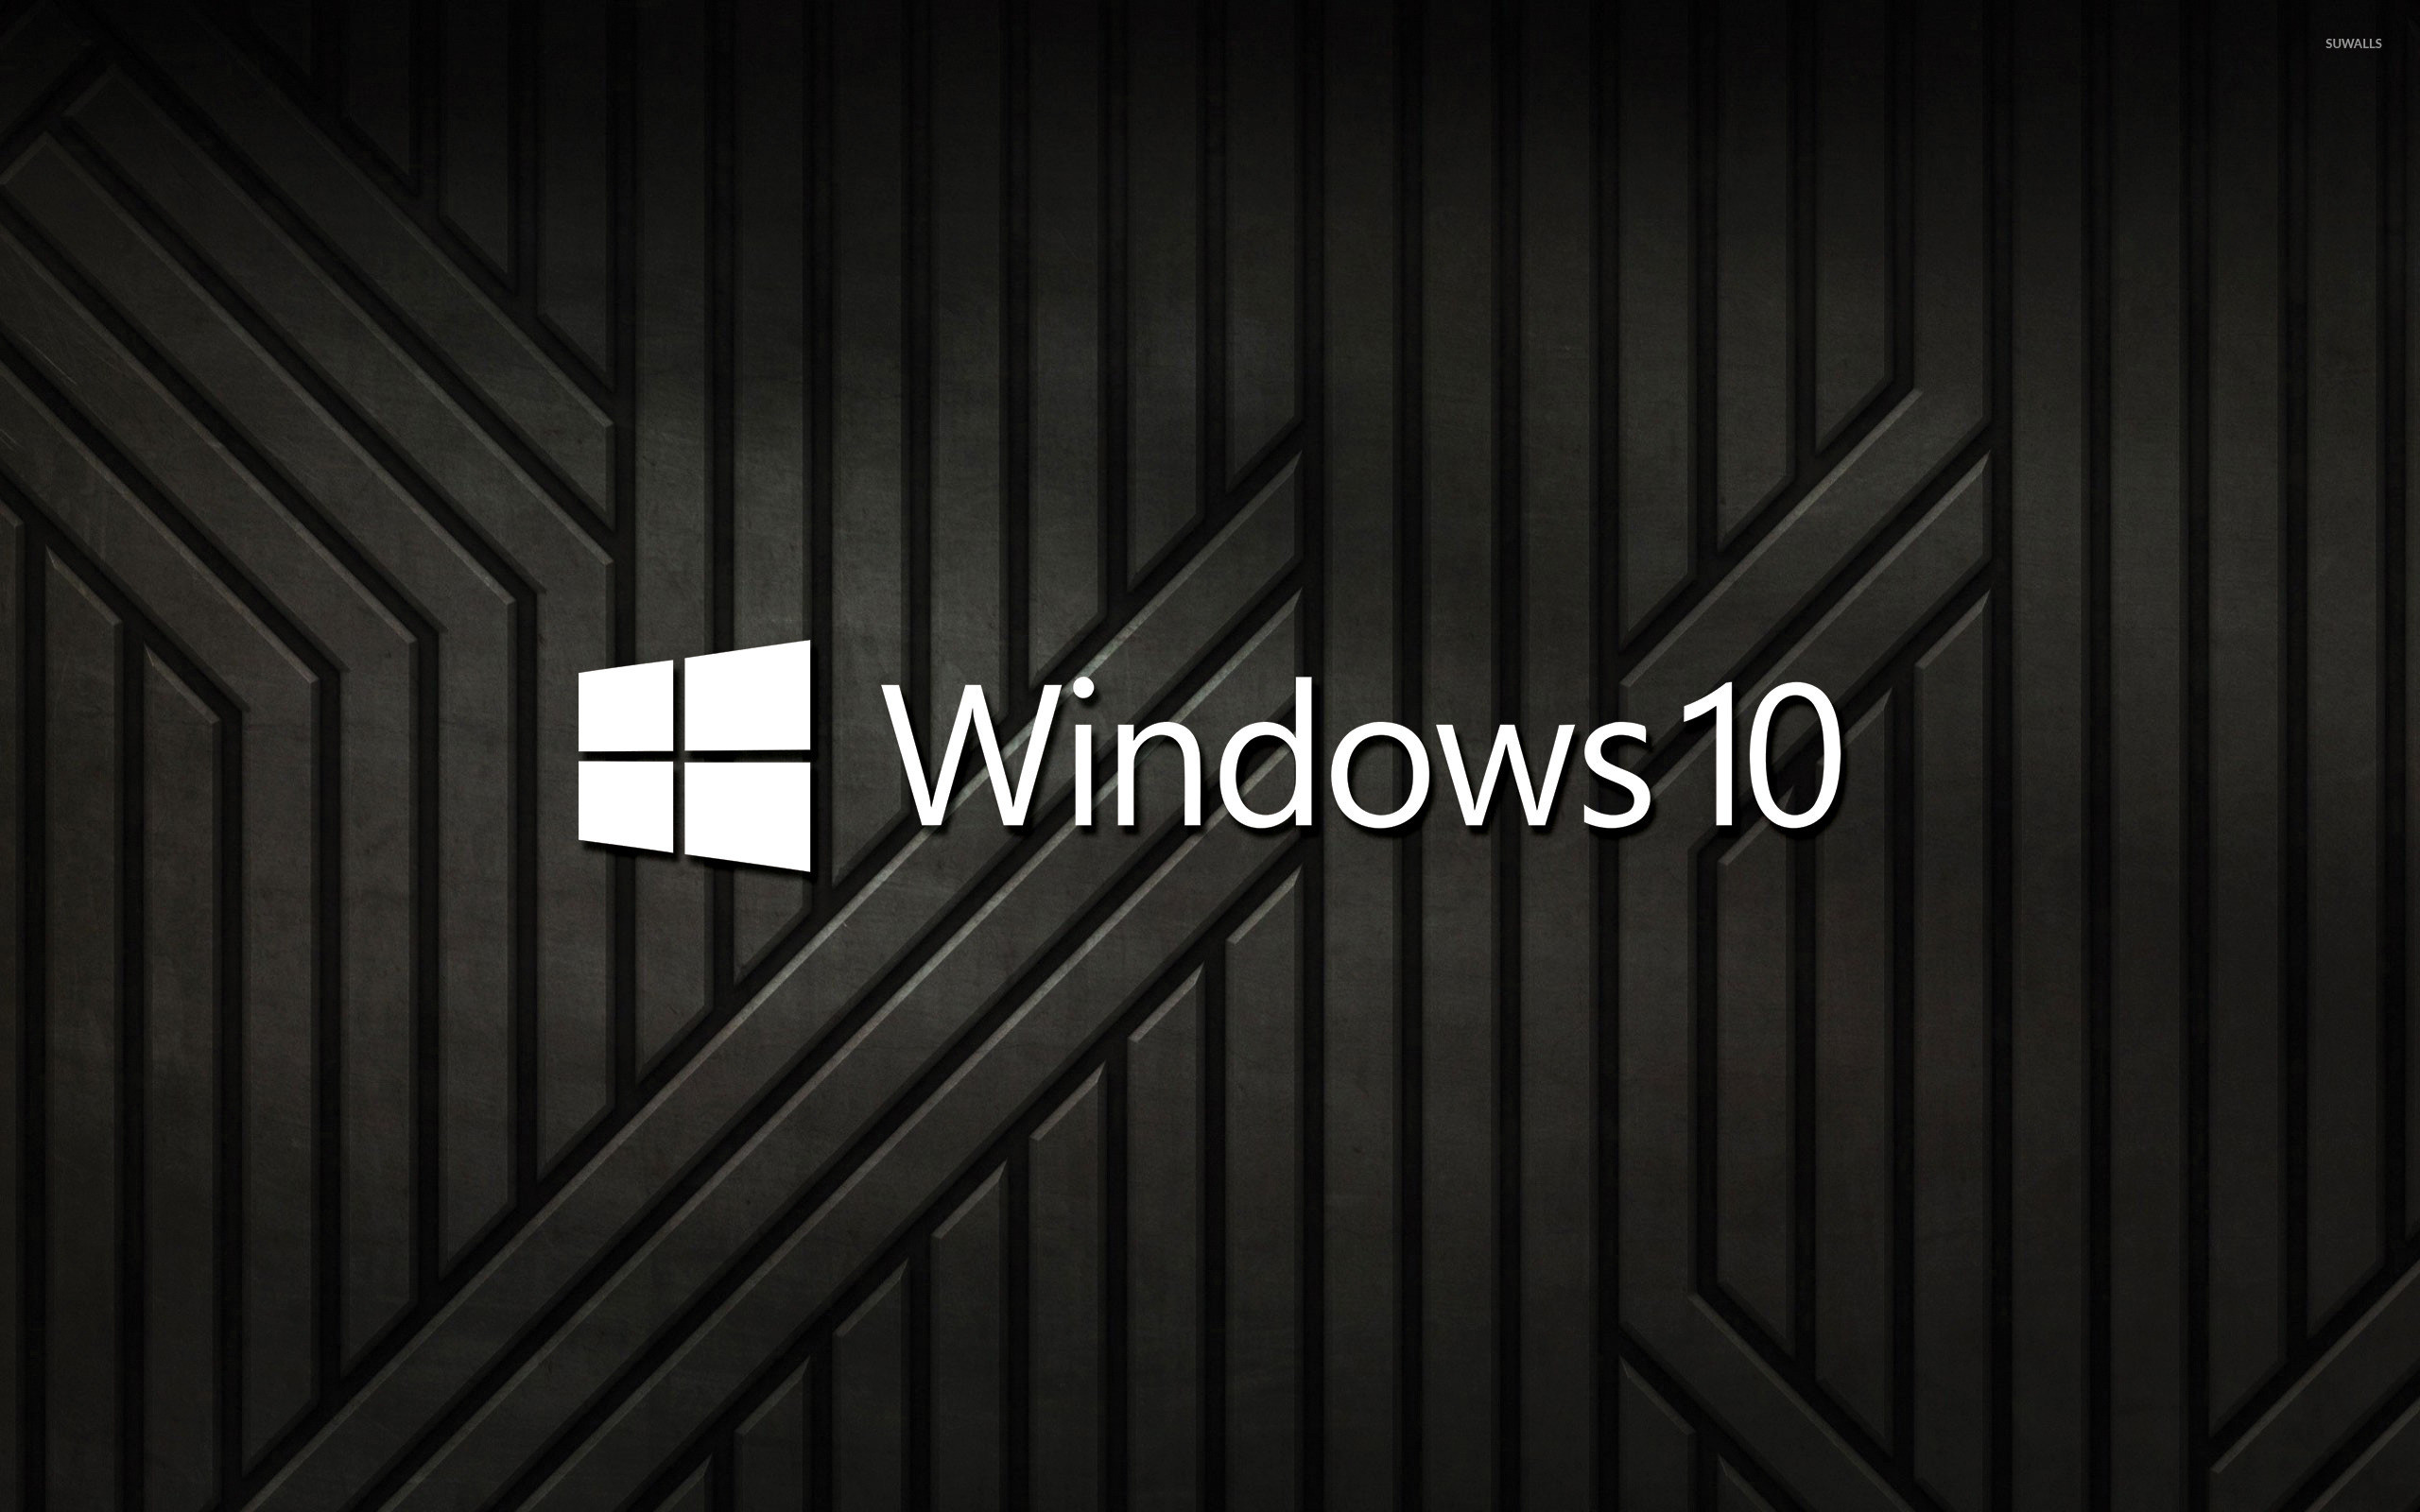 2560x1600 Windows 10 text logo on black metal stripes wallpaper  jpg